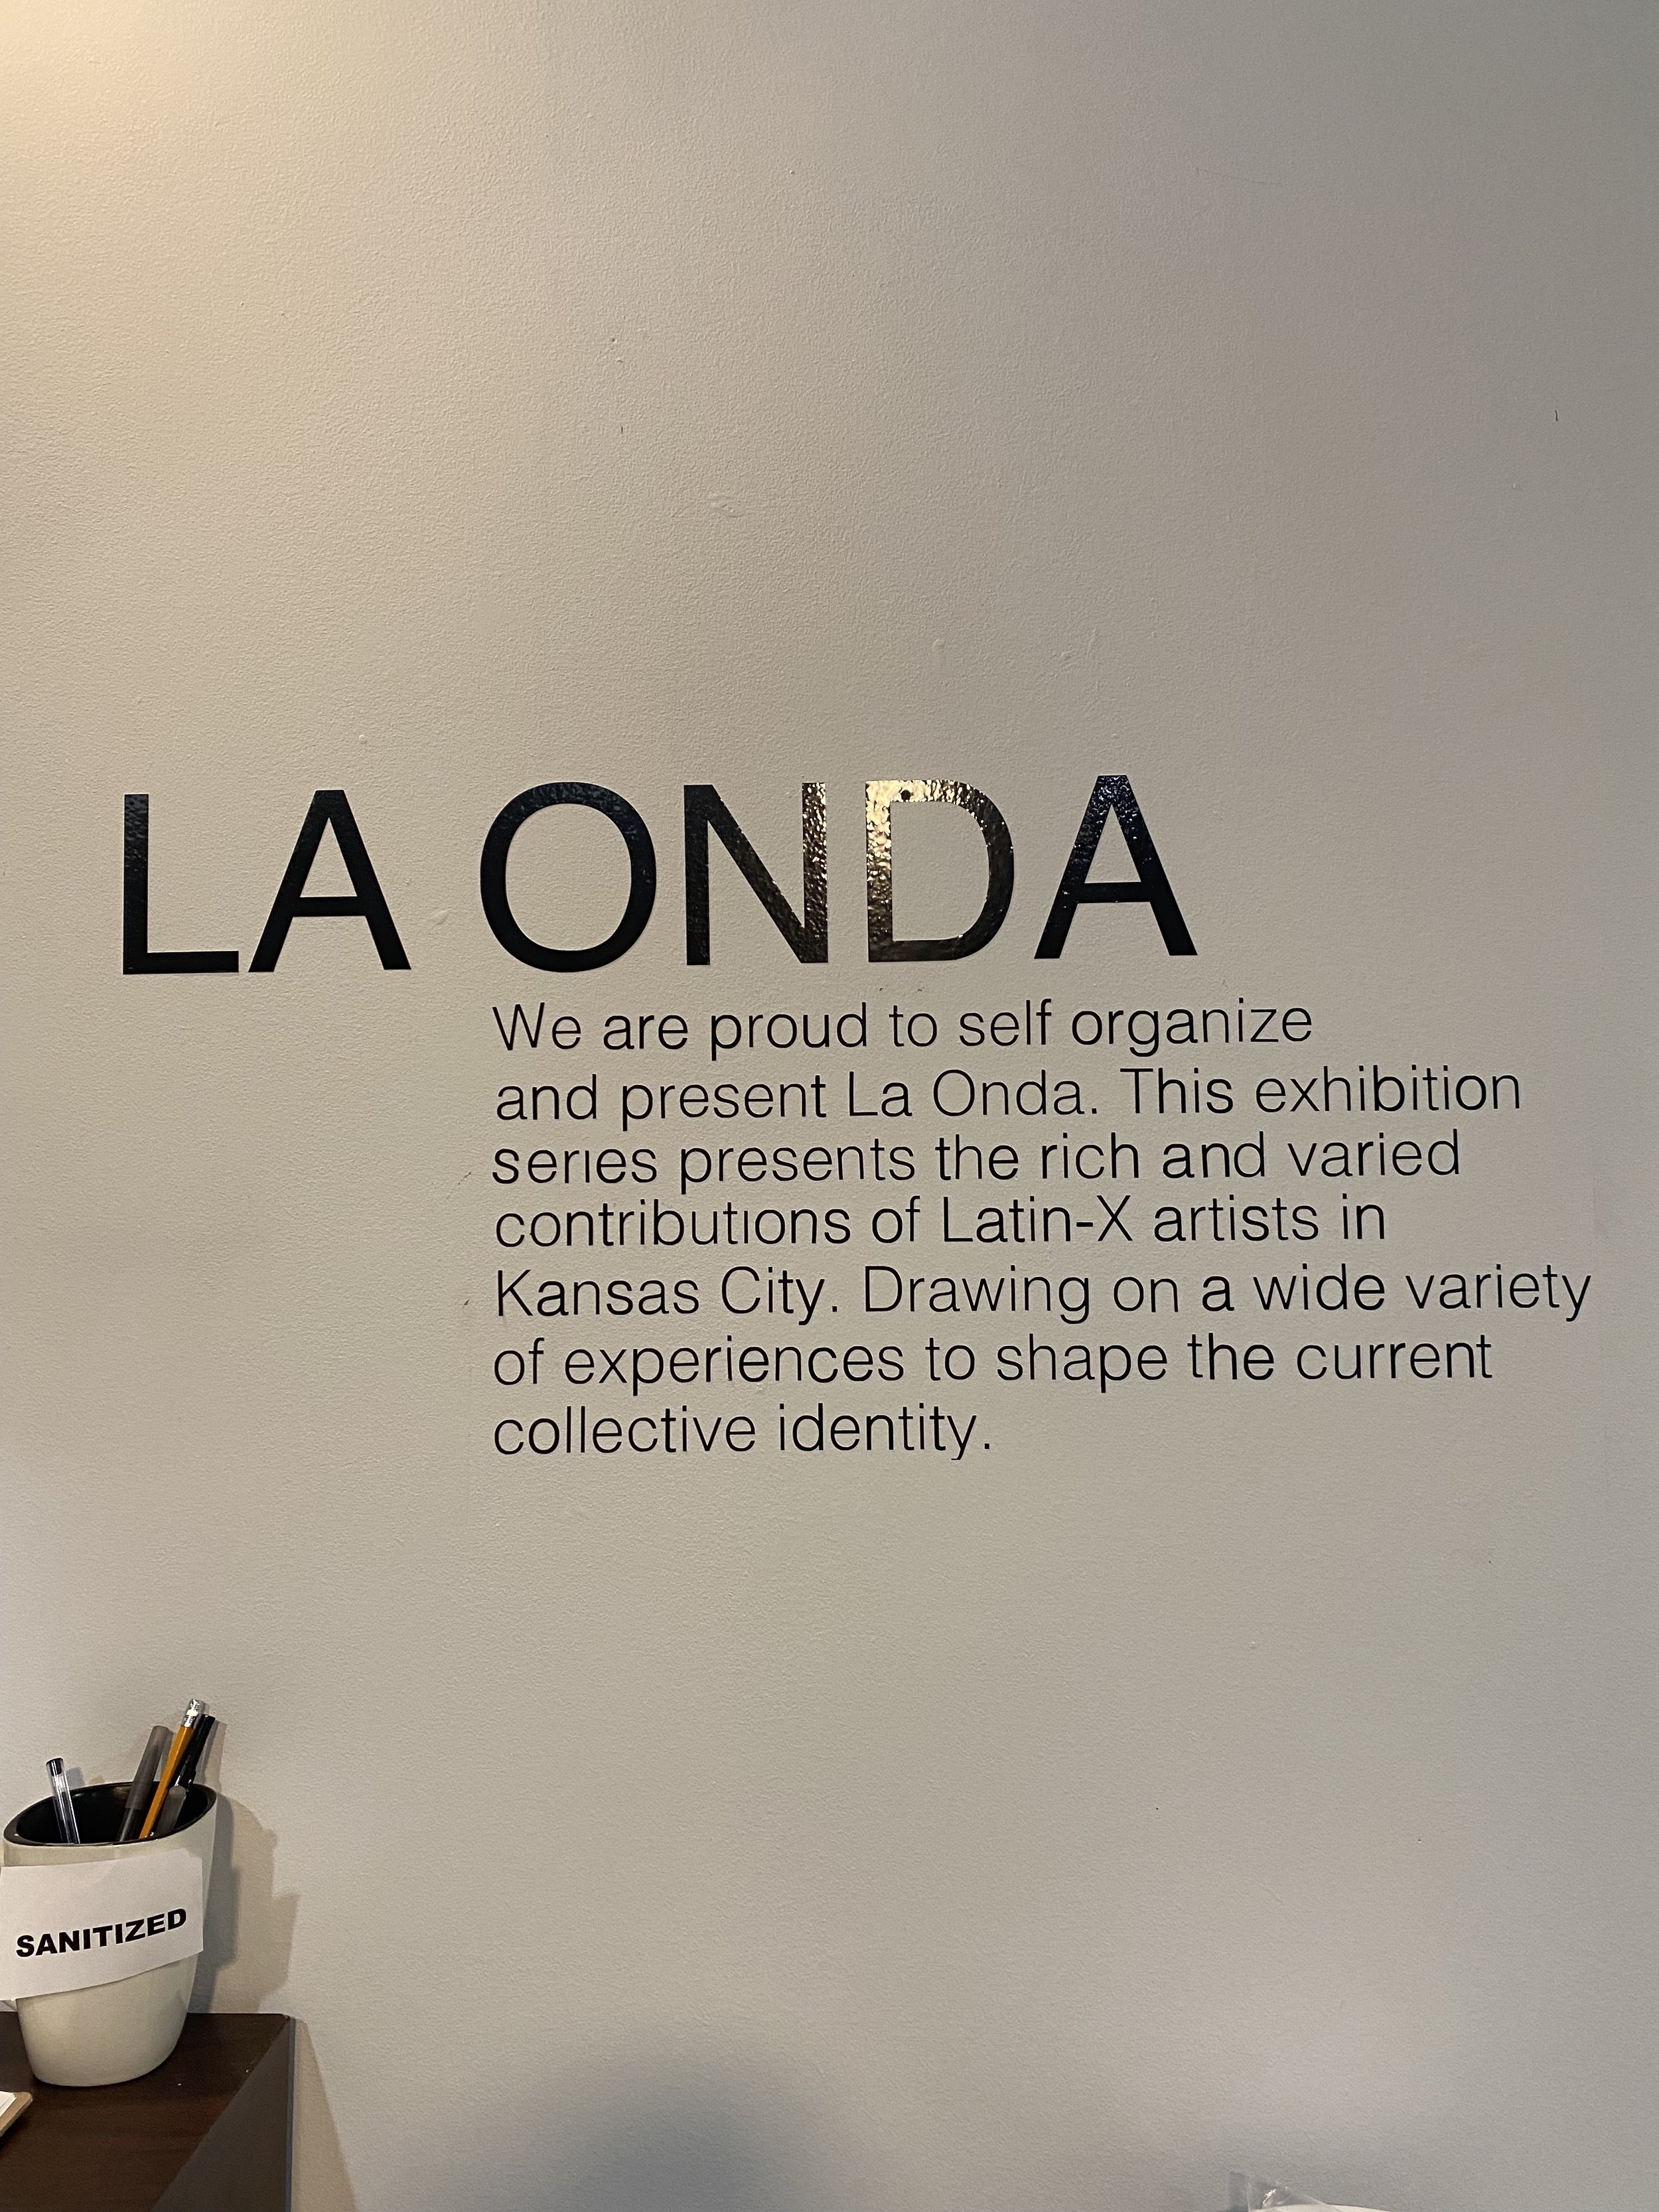  Installation image of a La Onda exhibition at Interurban Arthouse (Overland Park, Kansas) 